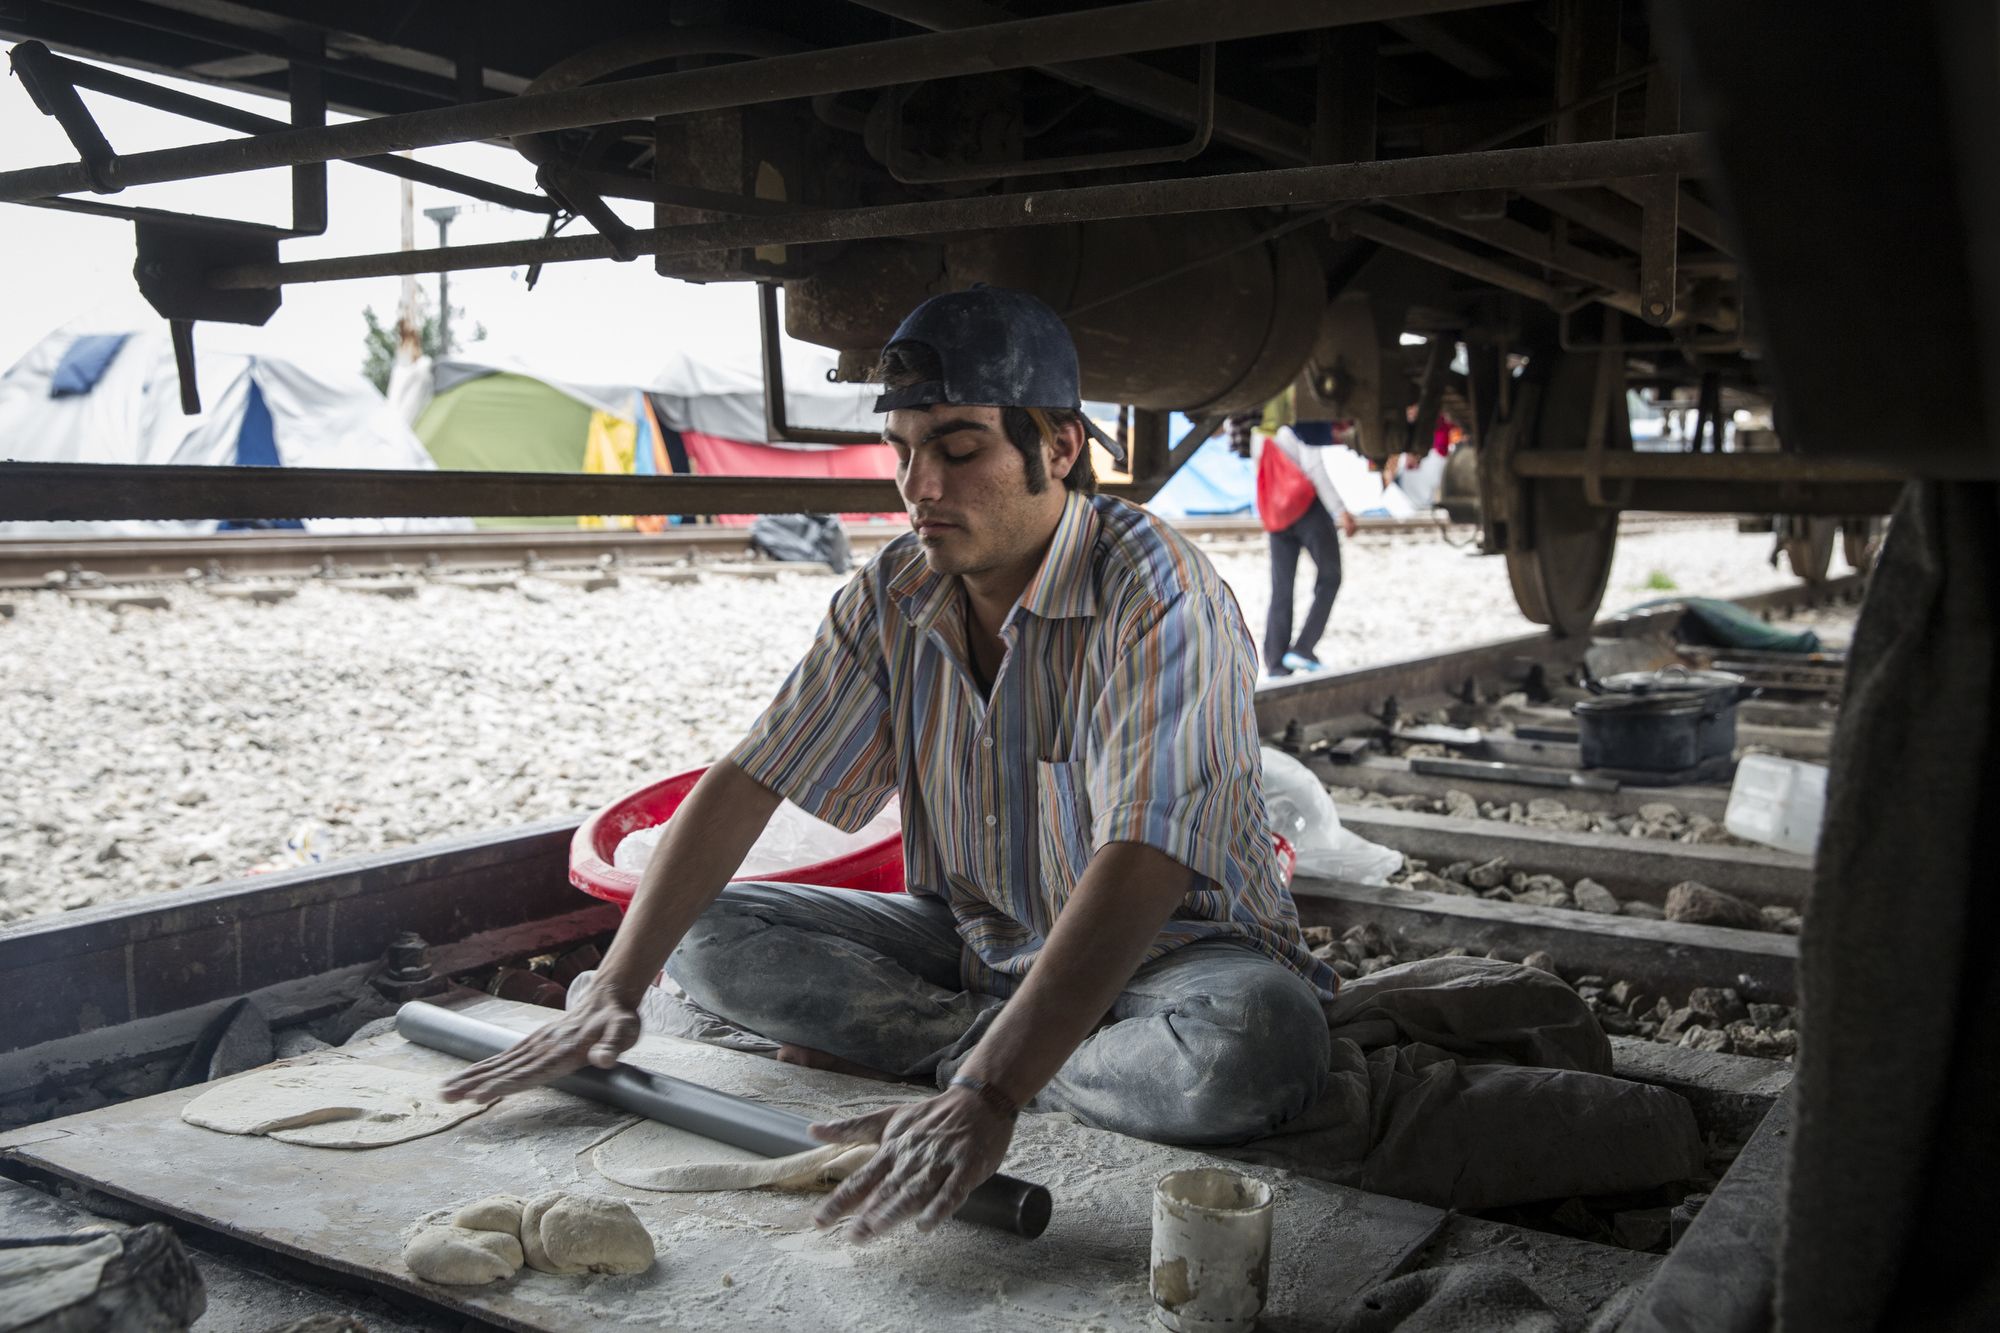 Syrian man bakes bread under train car 